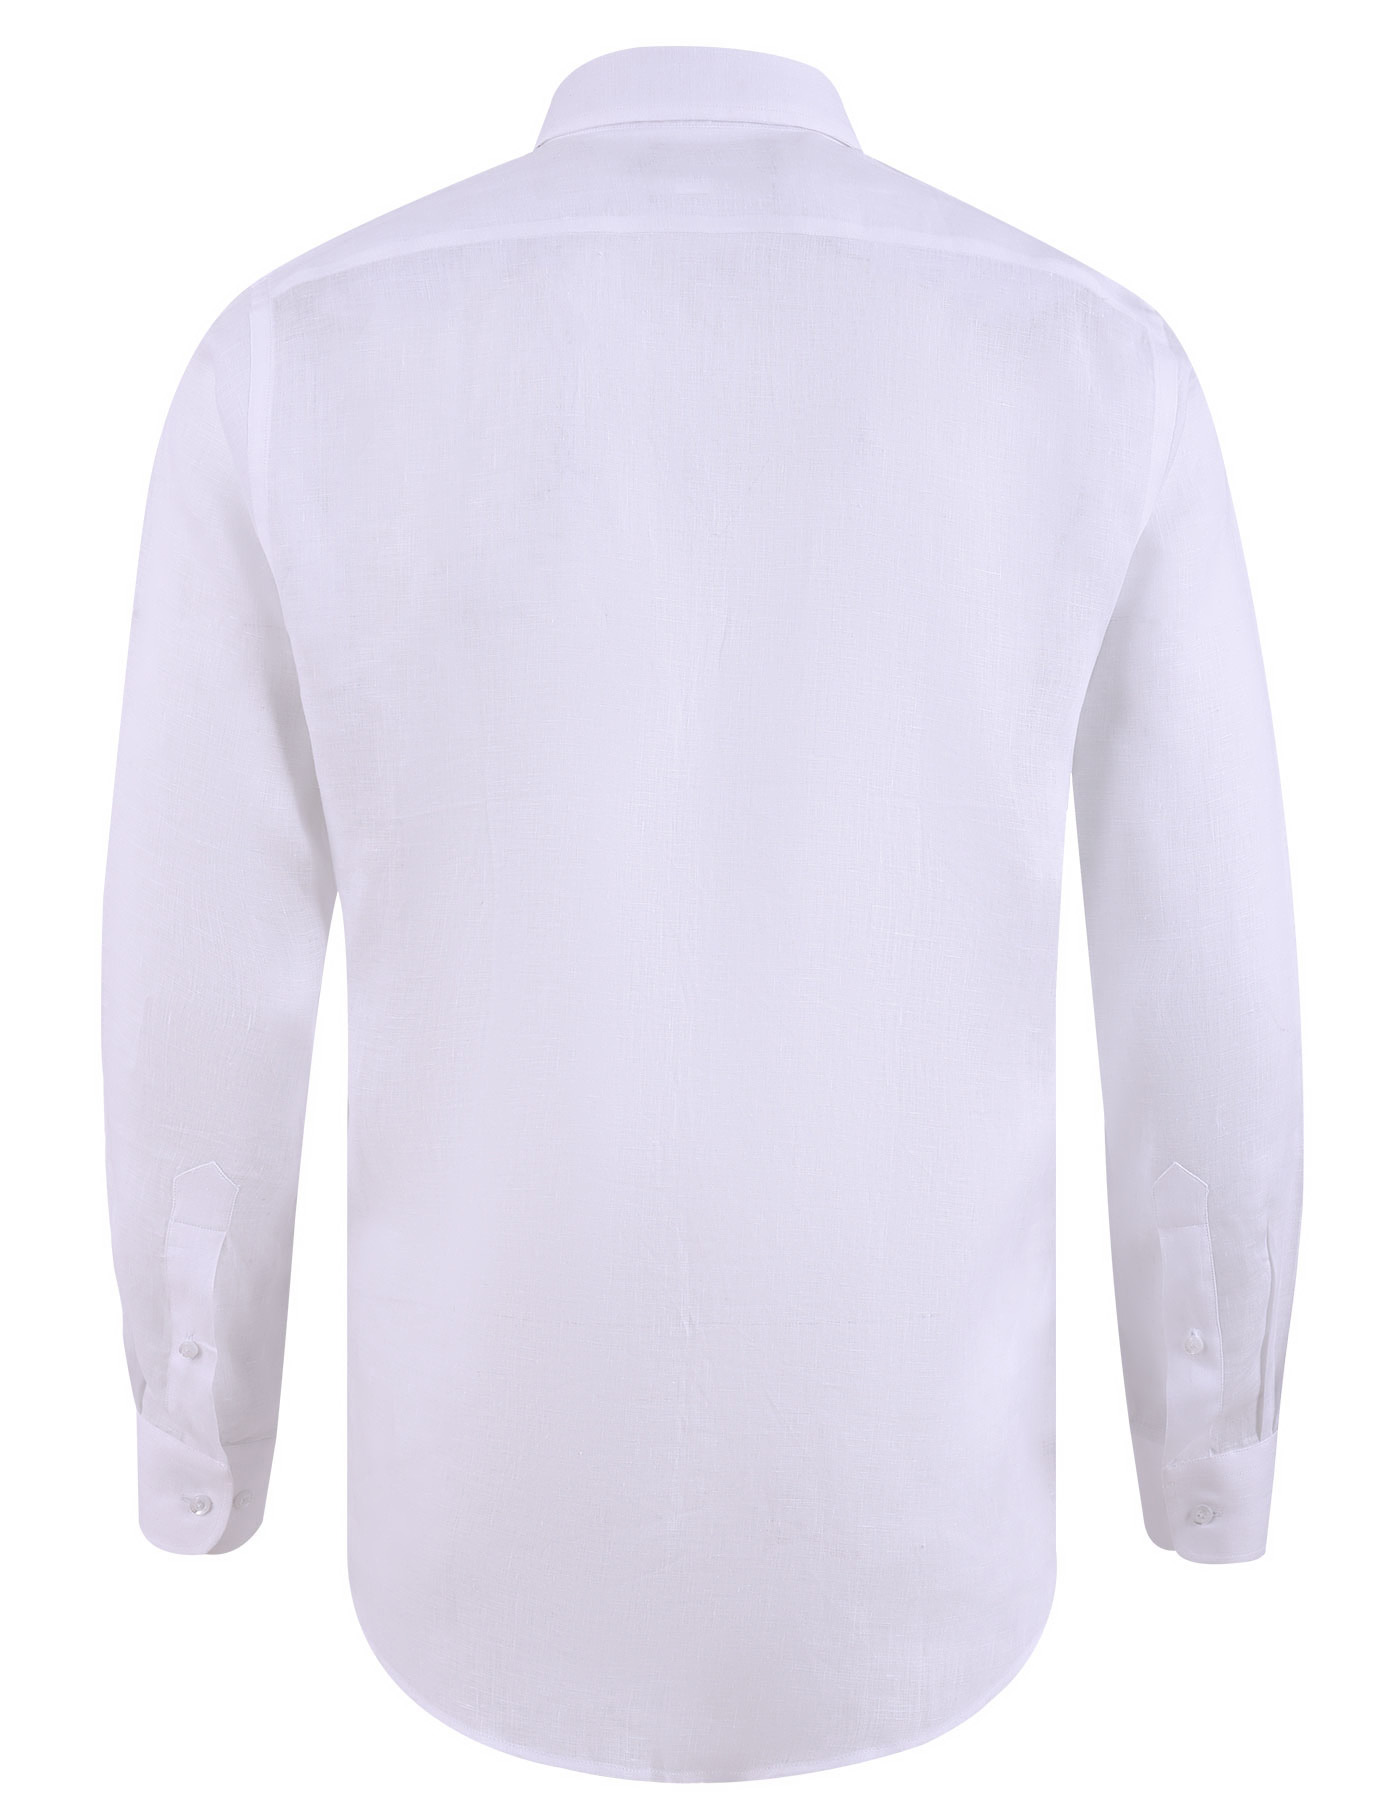 Buy Men White Formal Shirt Online Shopping In Pakistan | Uniworth